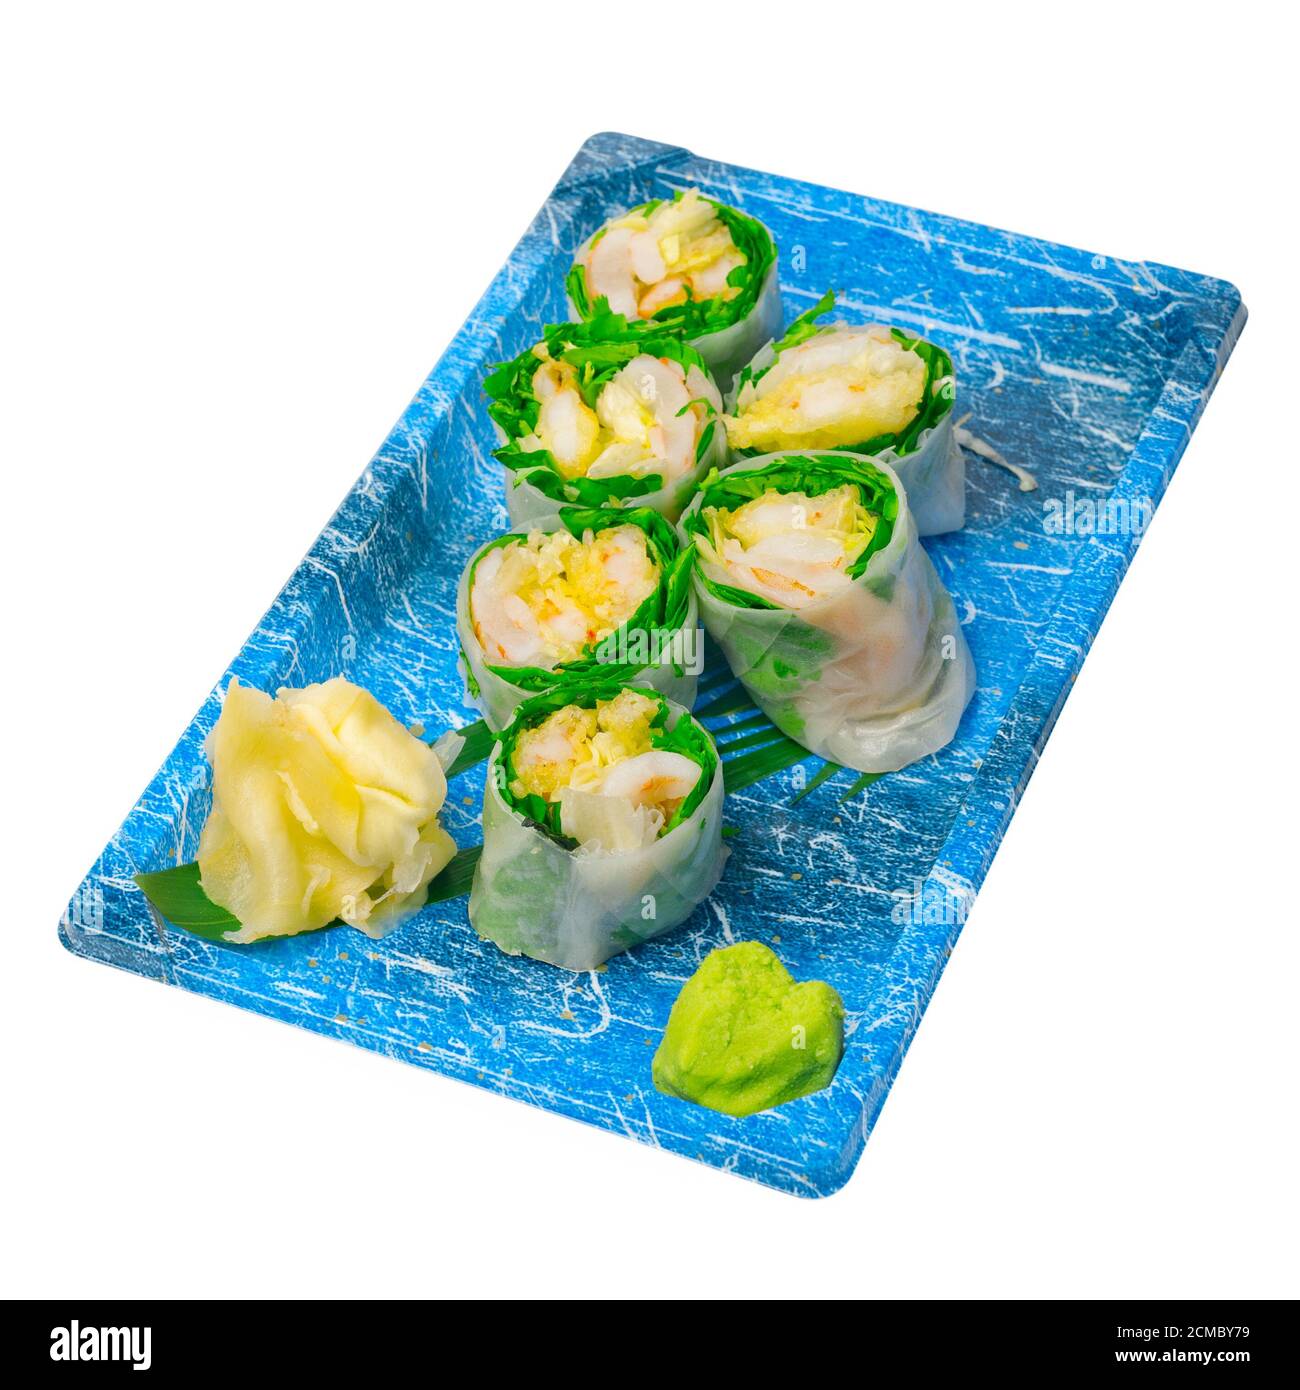 take away sushi express on plastic tray Stock Photo